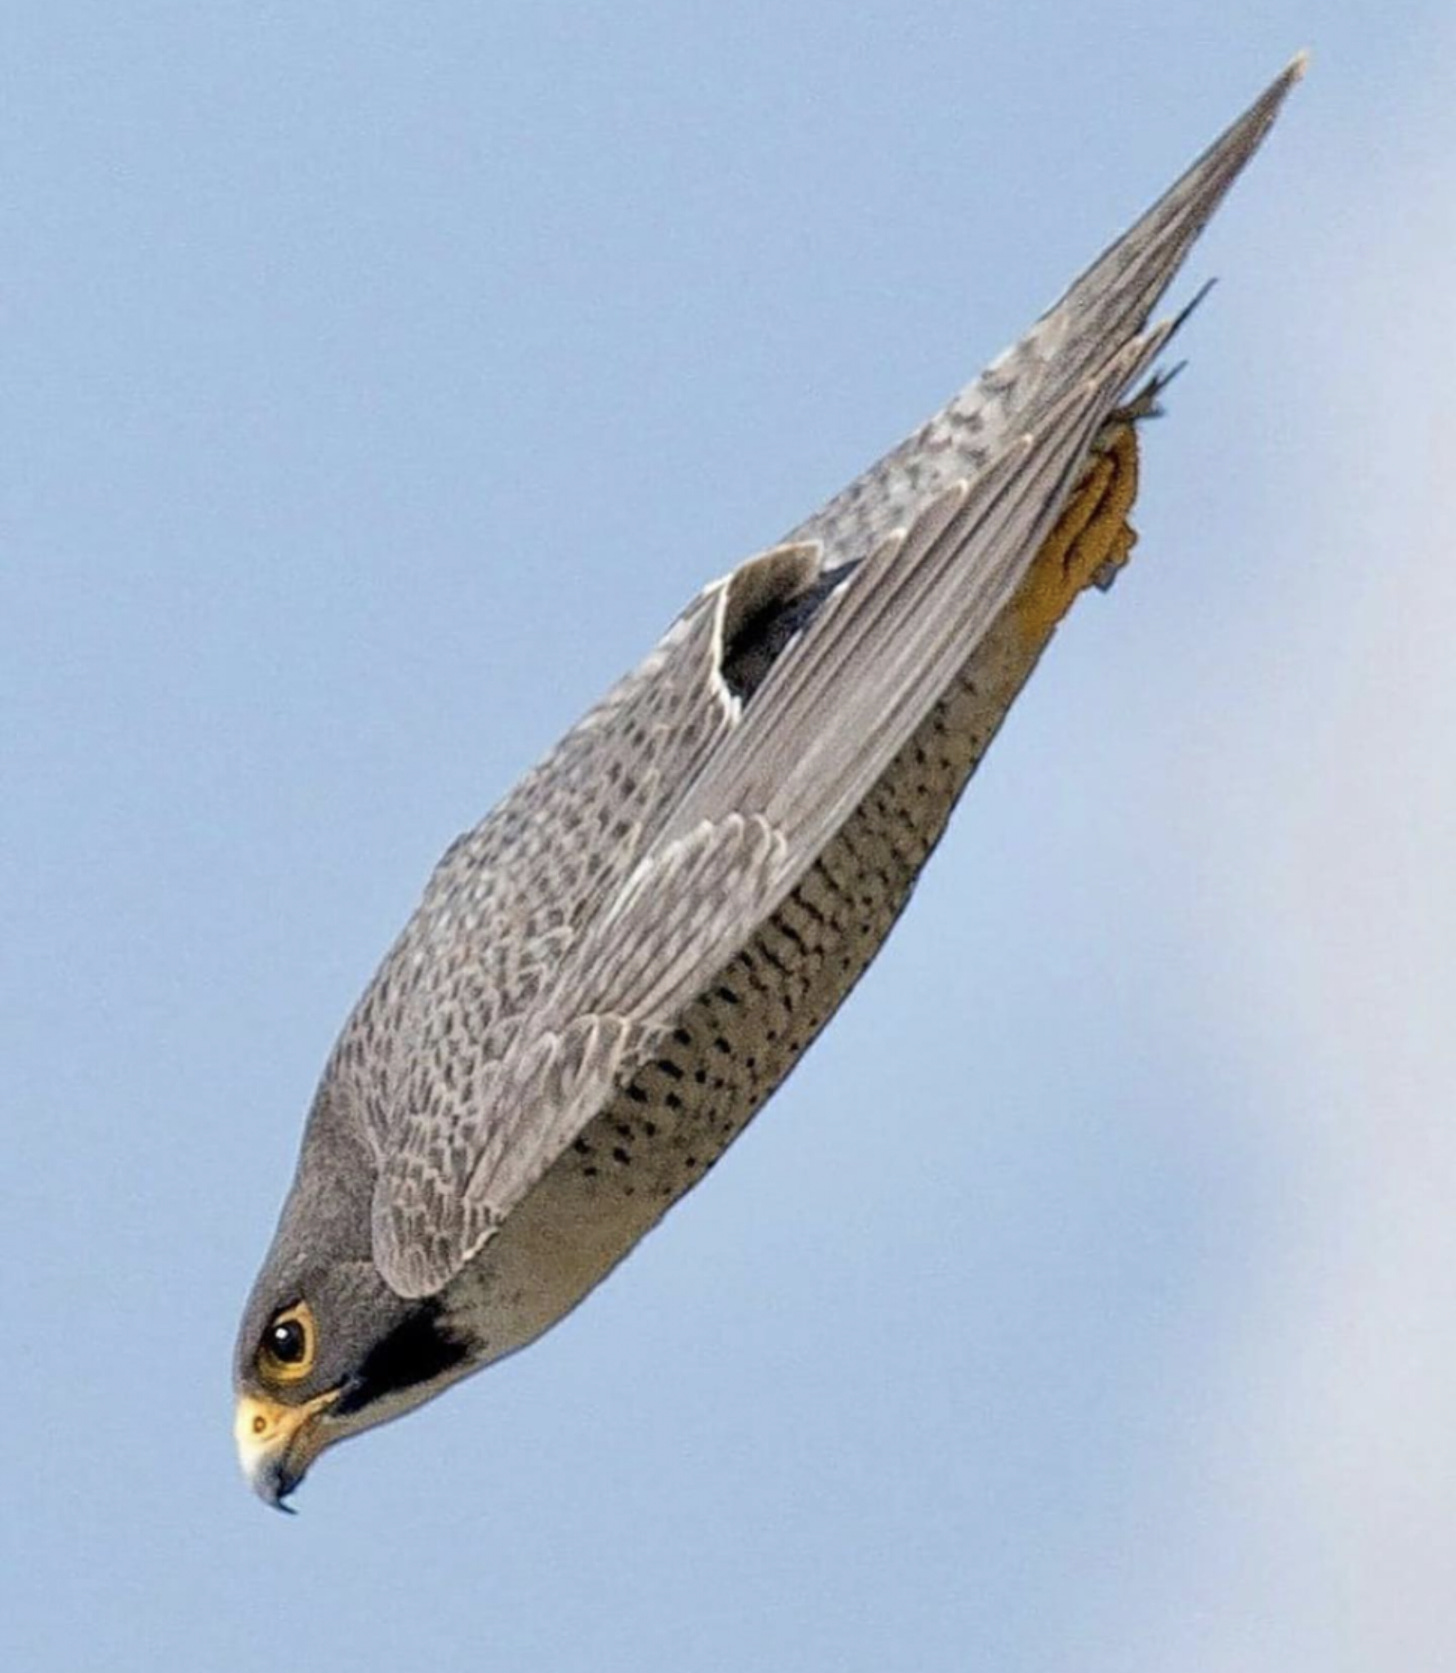 🔥 A Peregrine Falcon doing a dive bomb. : r/NatureIsFuckingLit